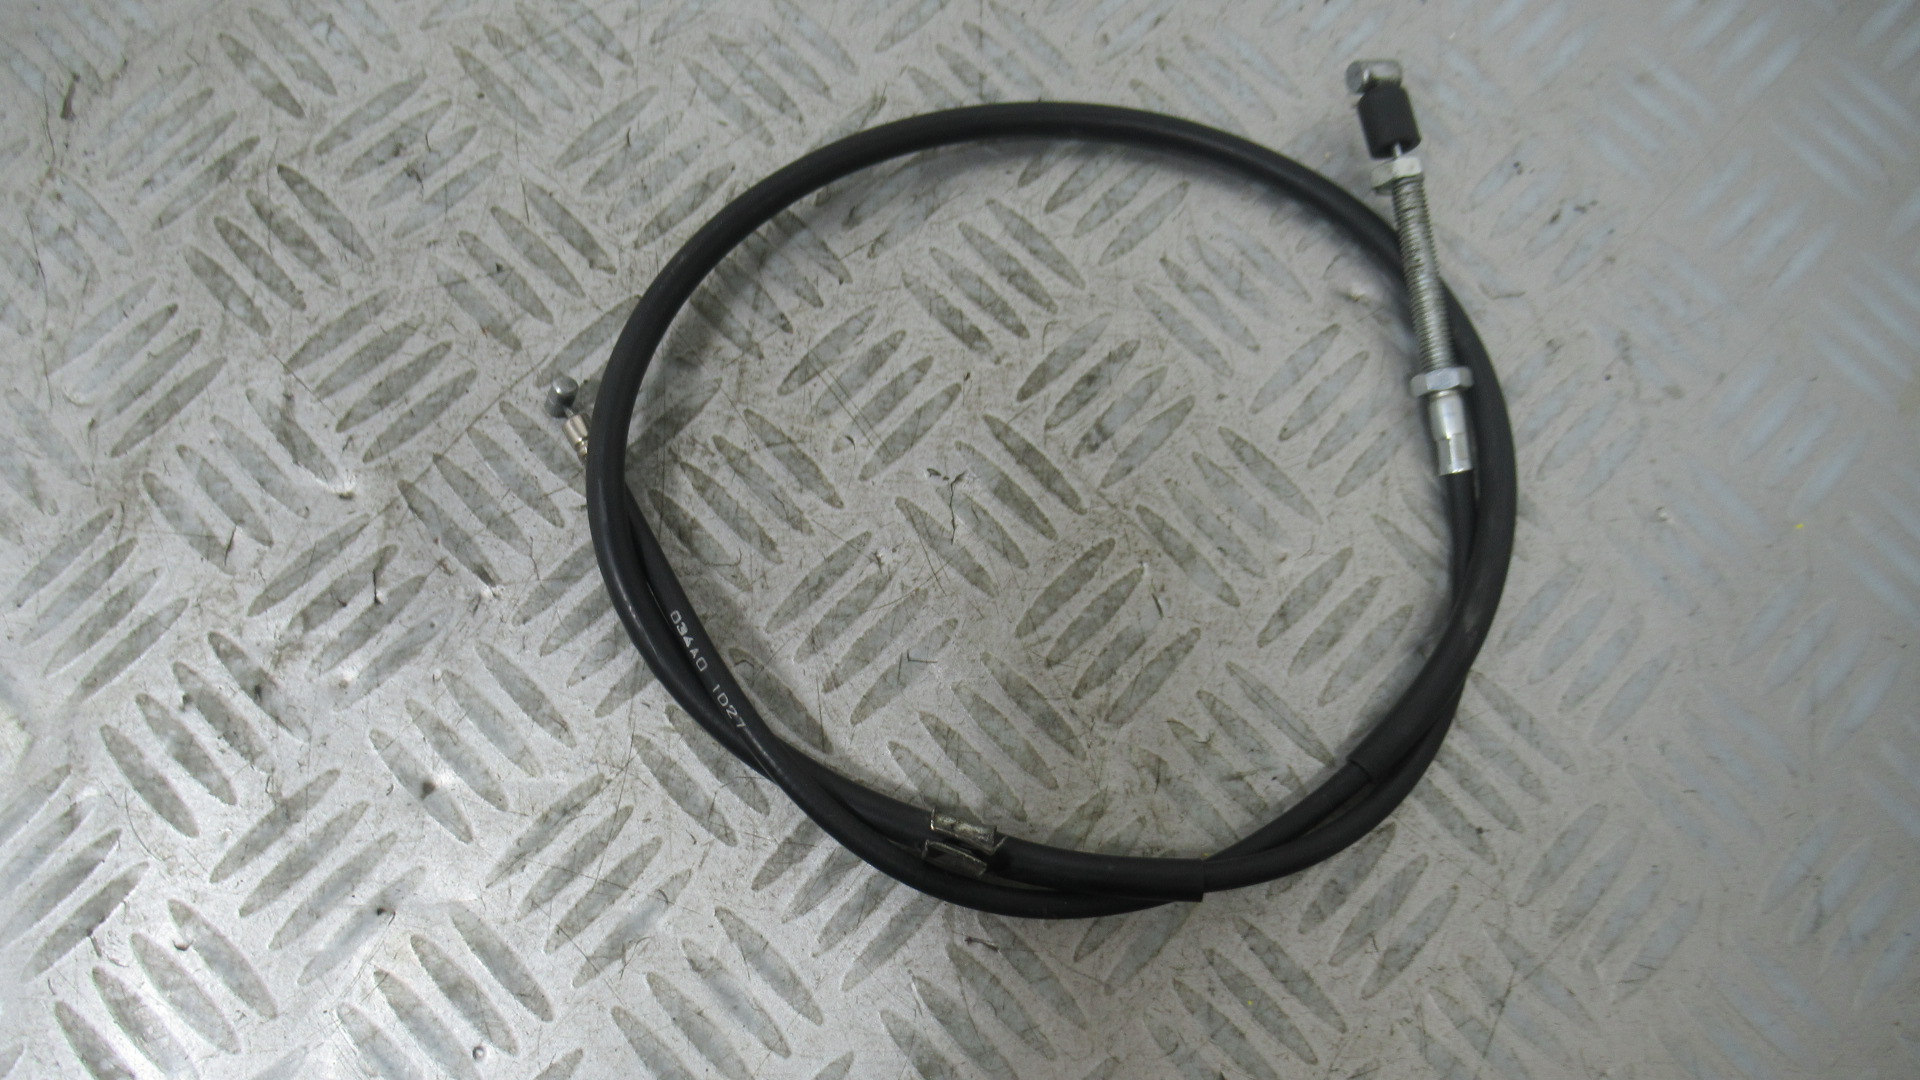 Cable frein avant Suzuki JR 80 2t